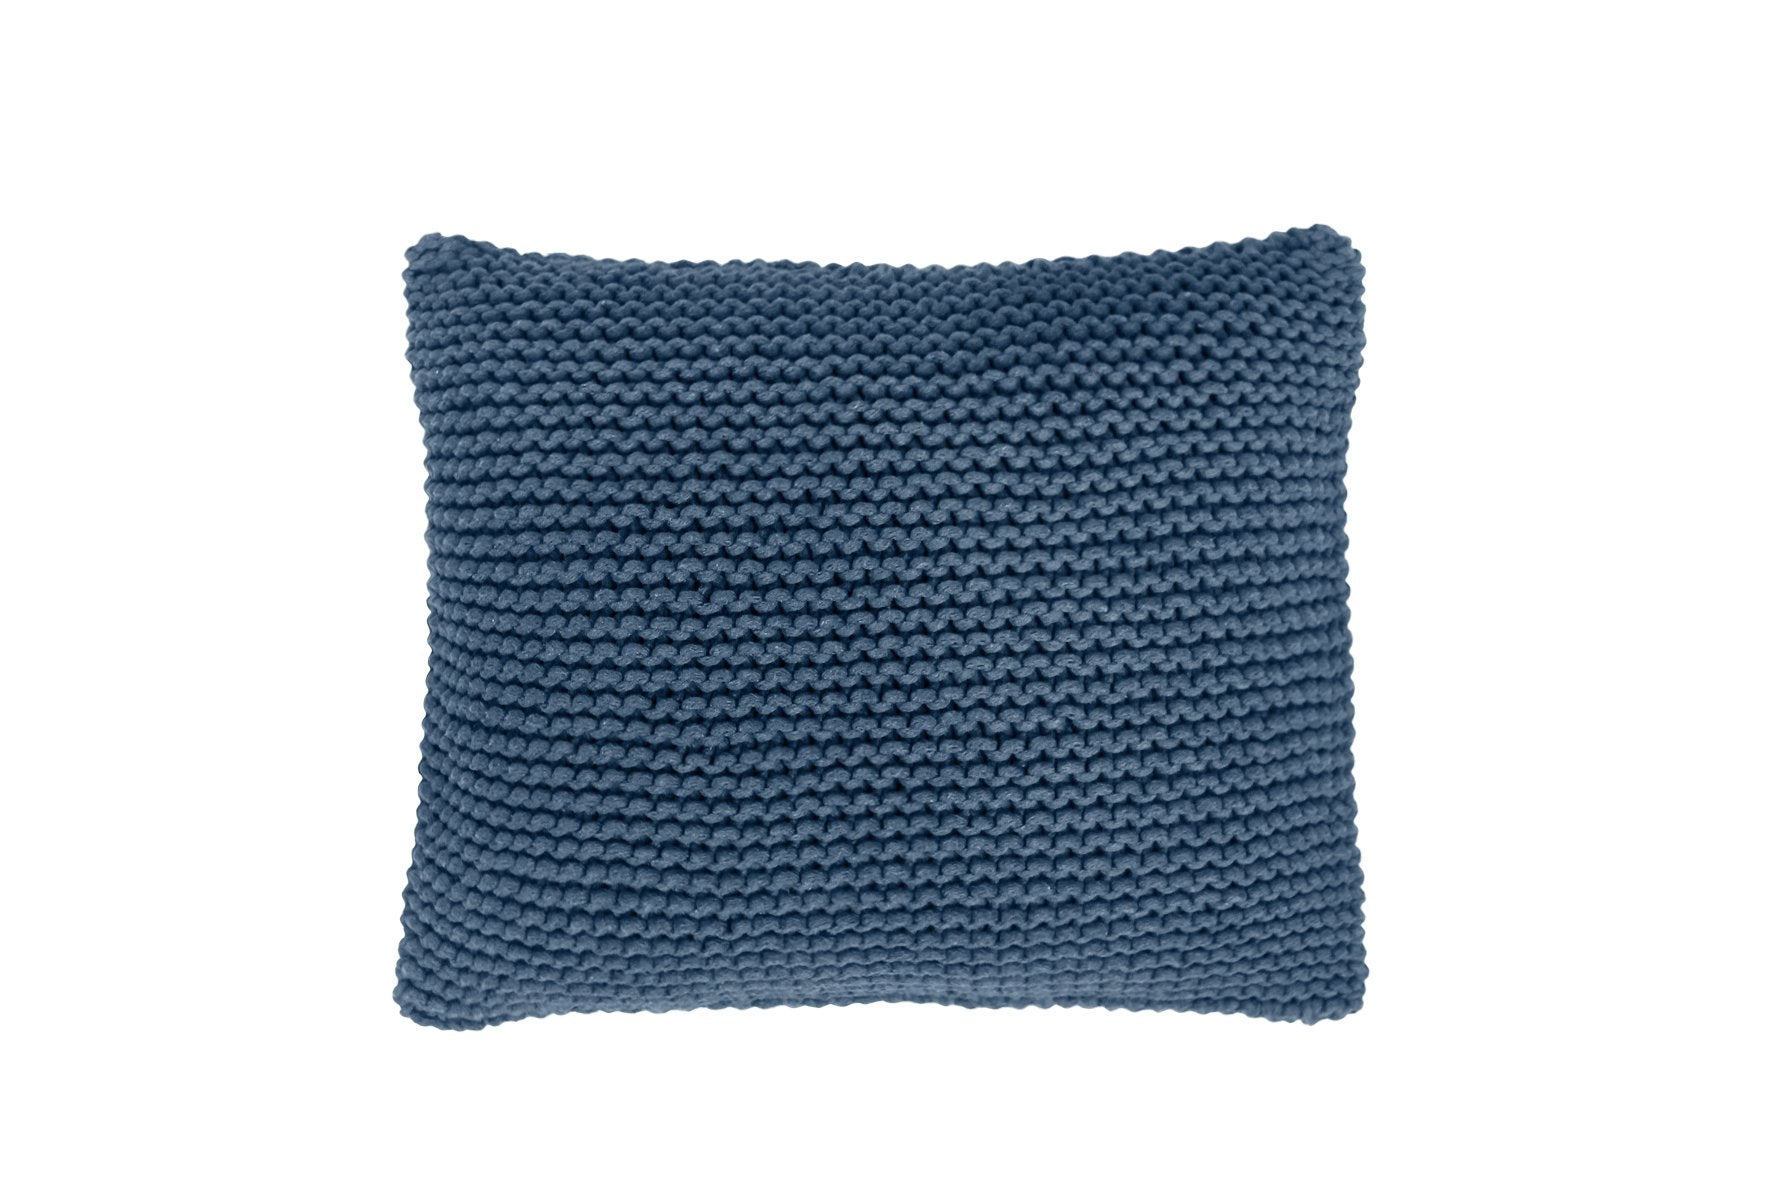 Zuri House Knitted Cushion | DENIM BLUE - 1 cushion 60 x 60 cm